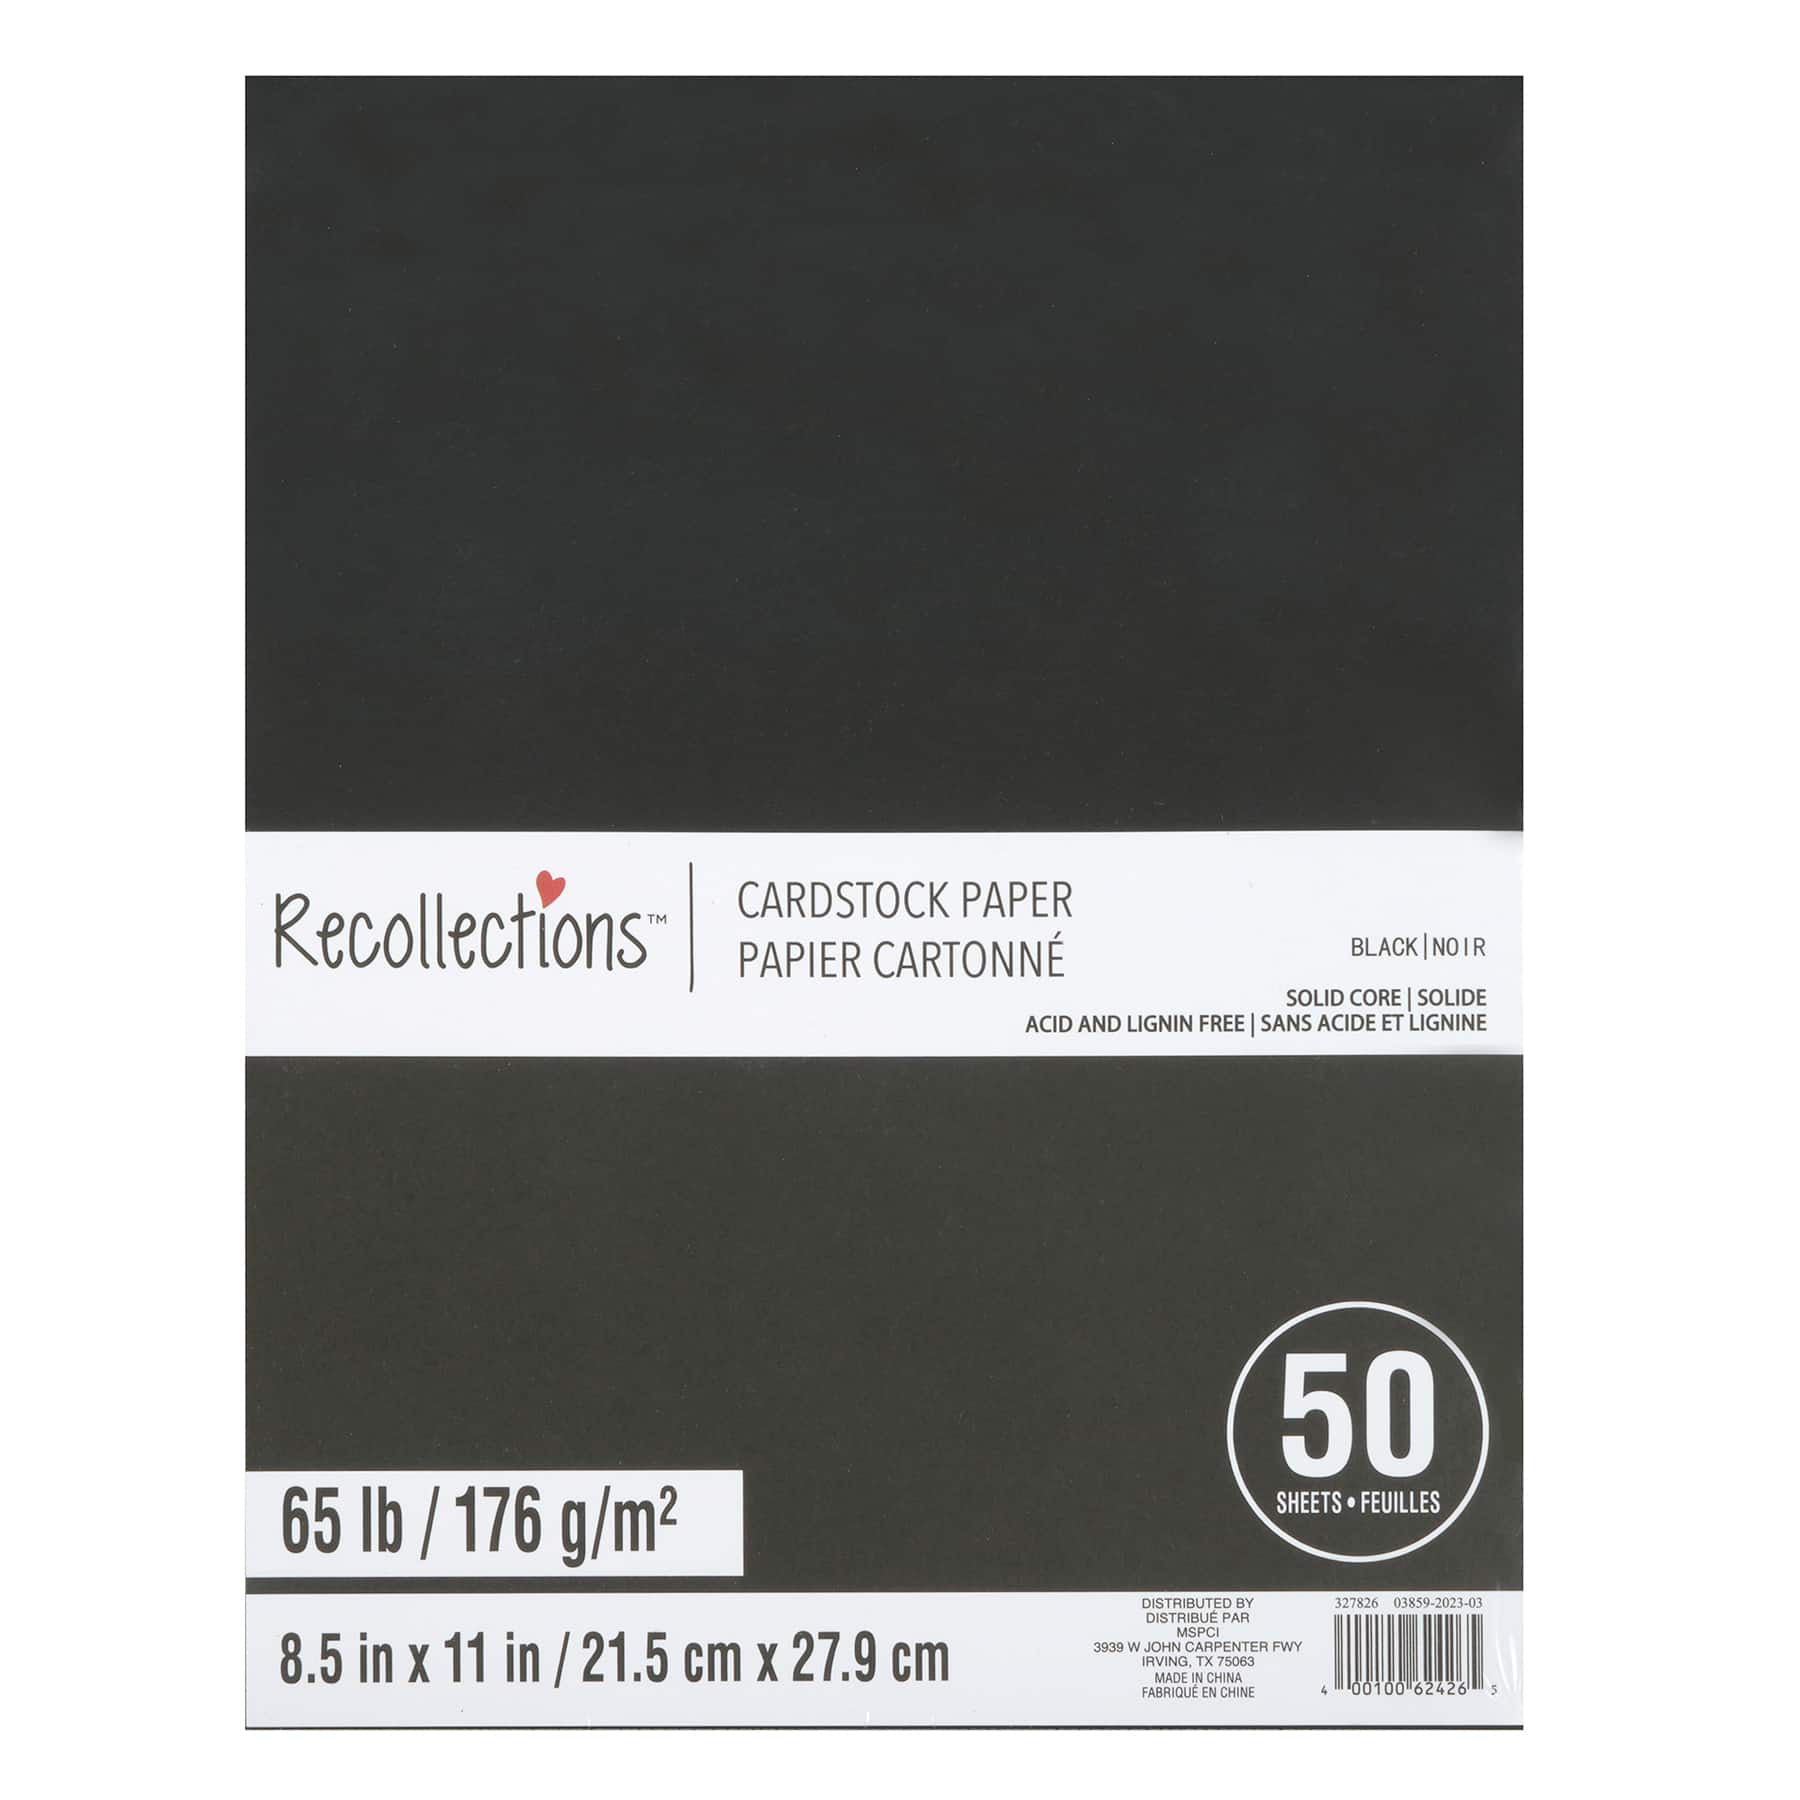 Dark Navy Blue Card Stock - 12 x 18 Gmund Colors Matt 111lb Cover